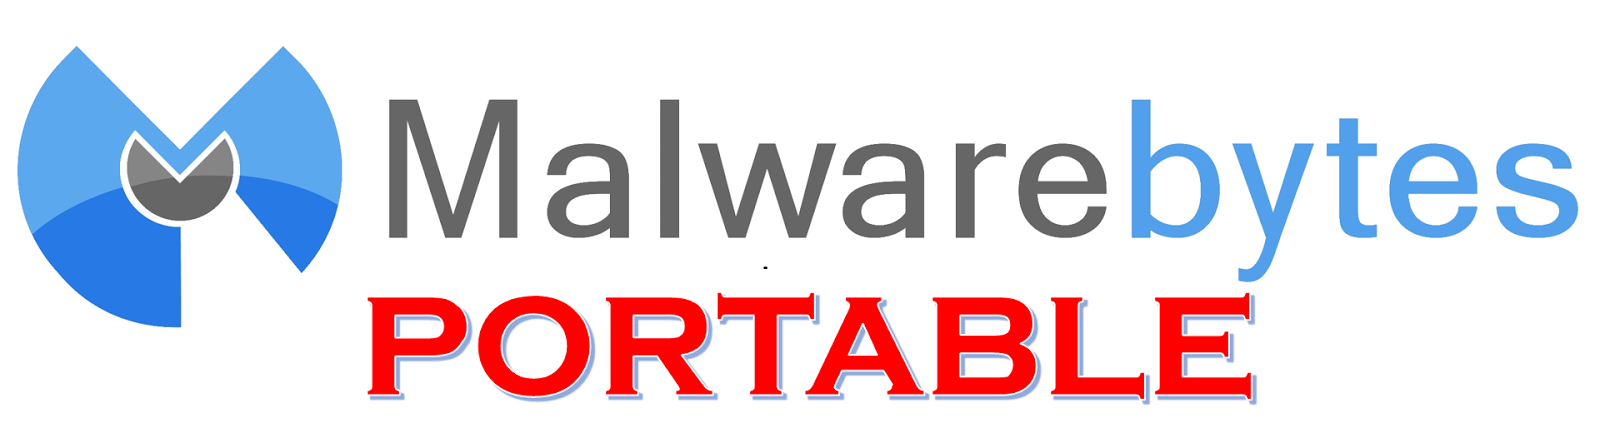 malwarebytes portable no install